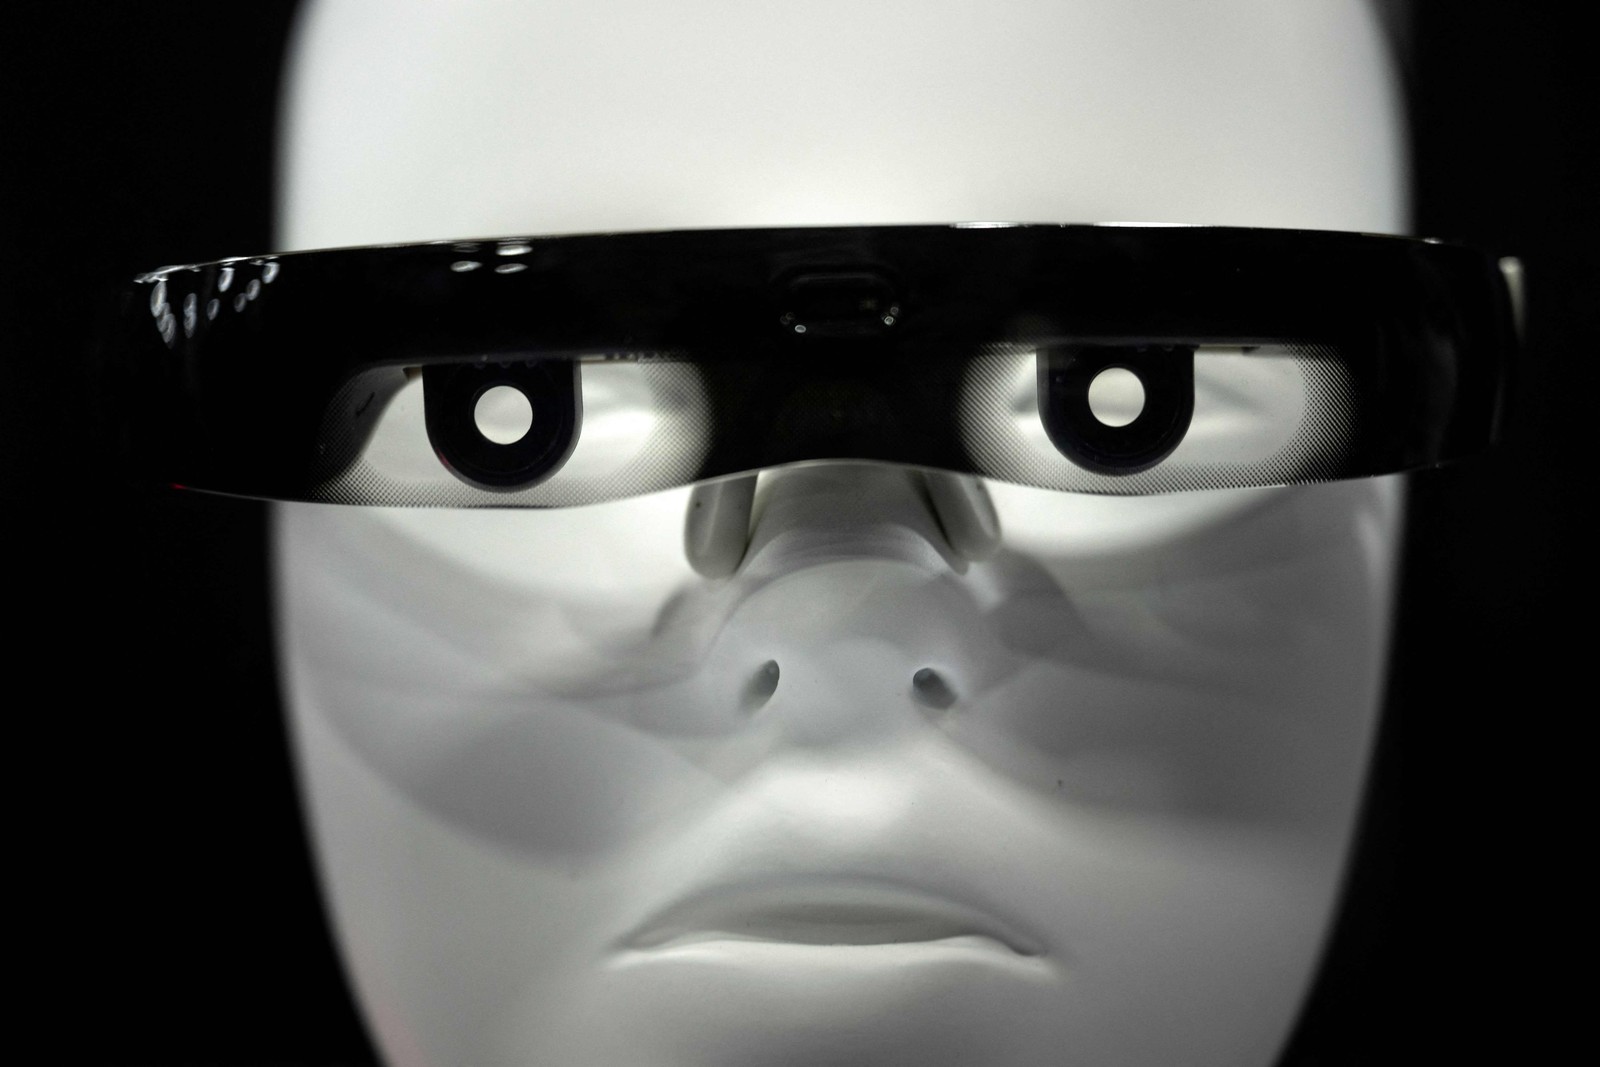 Óculos com foco automático da Vision — Foto: Brendan Smialowski / AFP